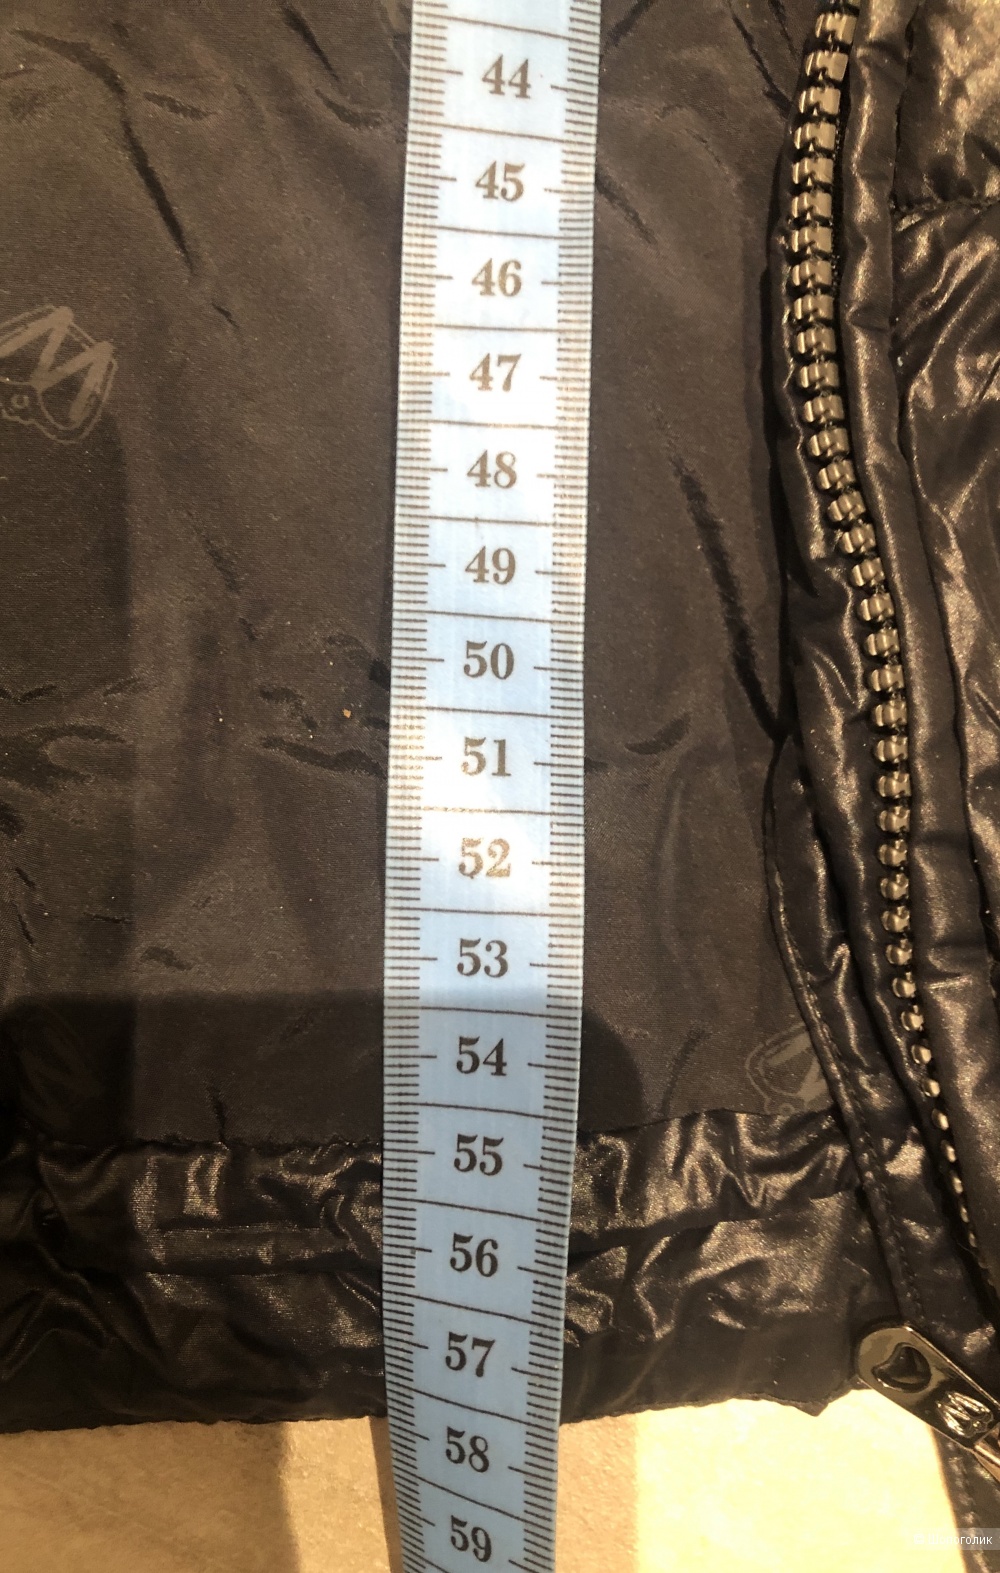 Женская куртка-пуховик WEEKEND MAX MARA размер 40 ( на 44-46 размер )